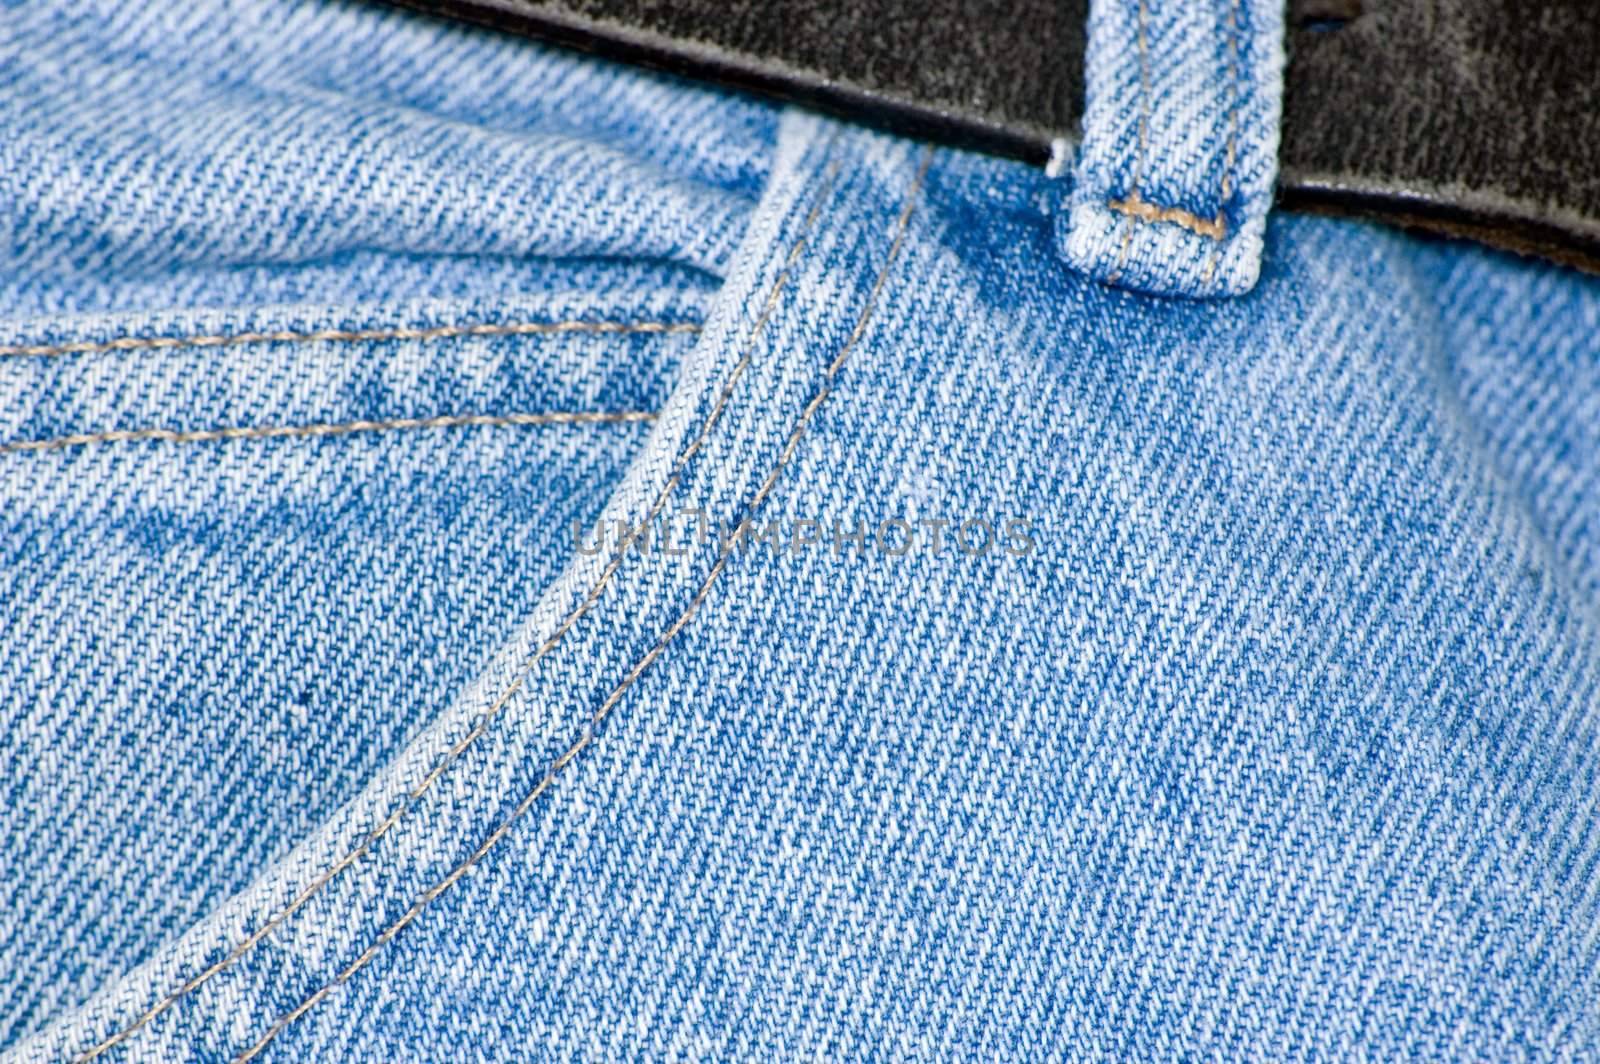 Change pocket on a pair of denim pants.